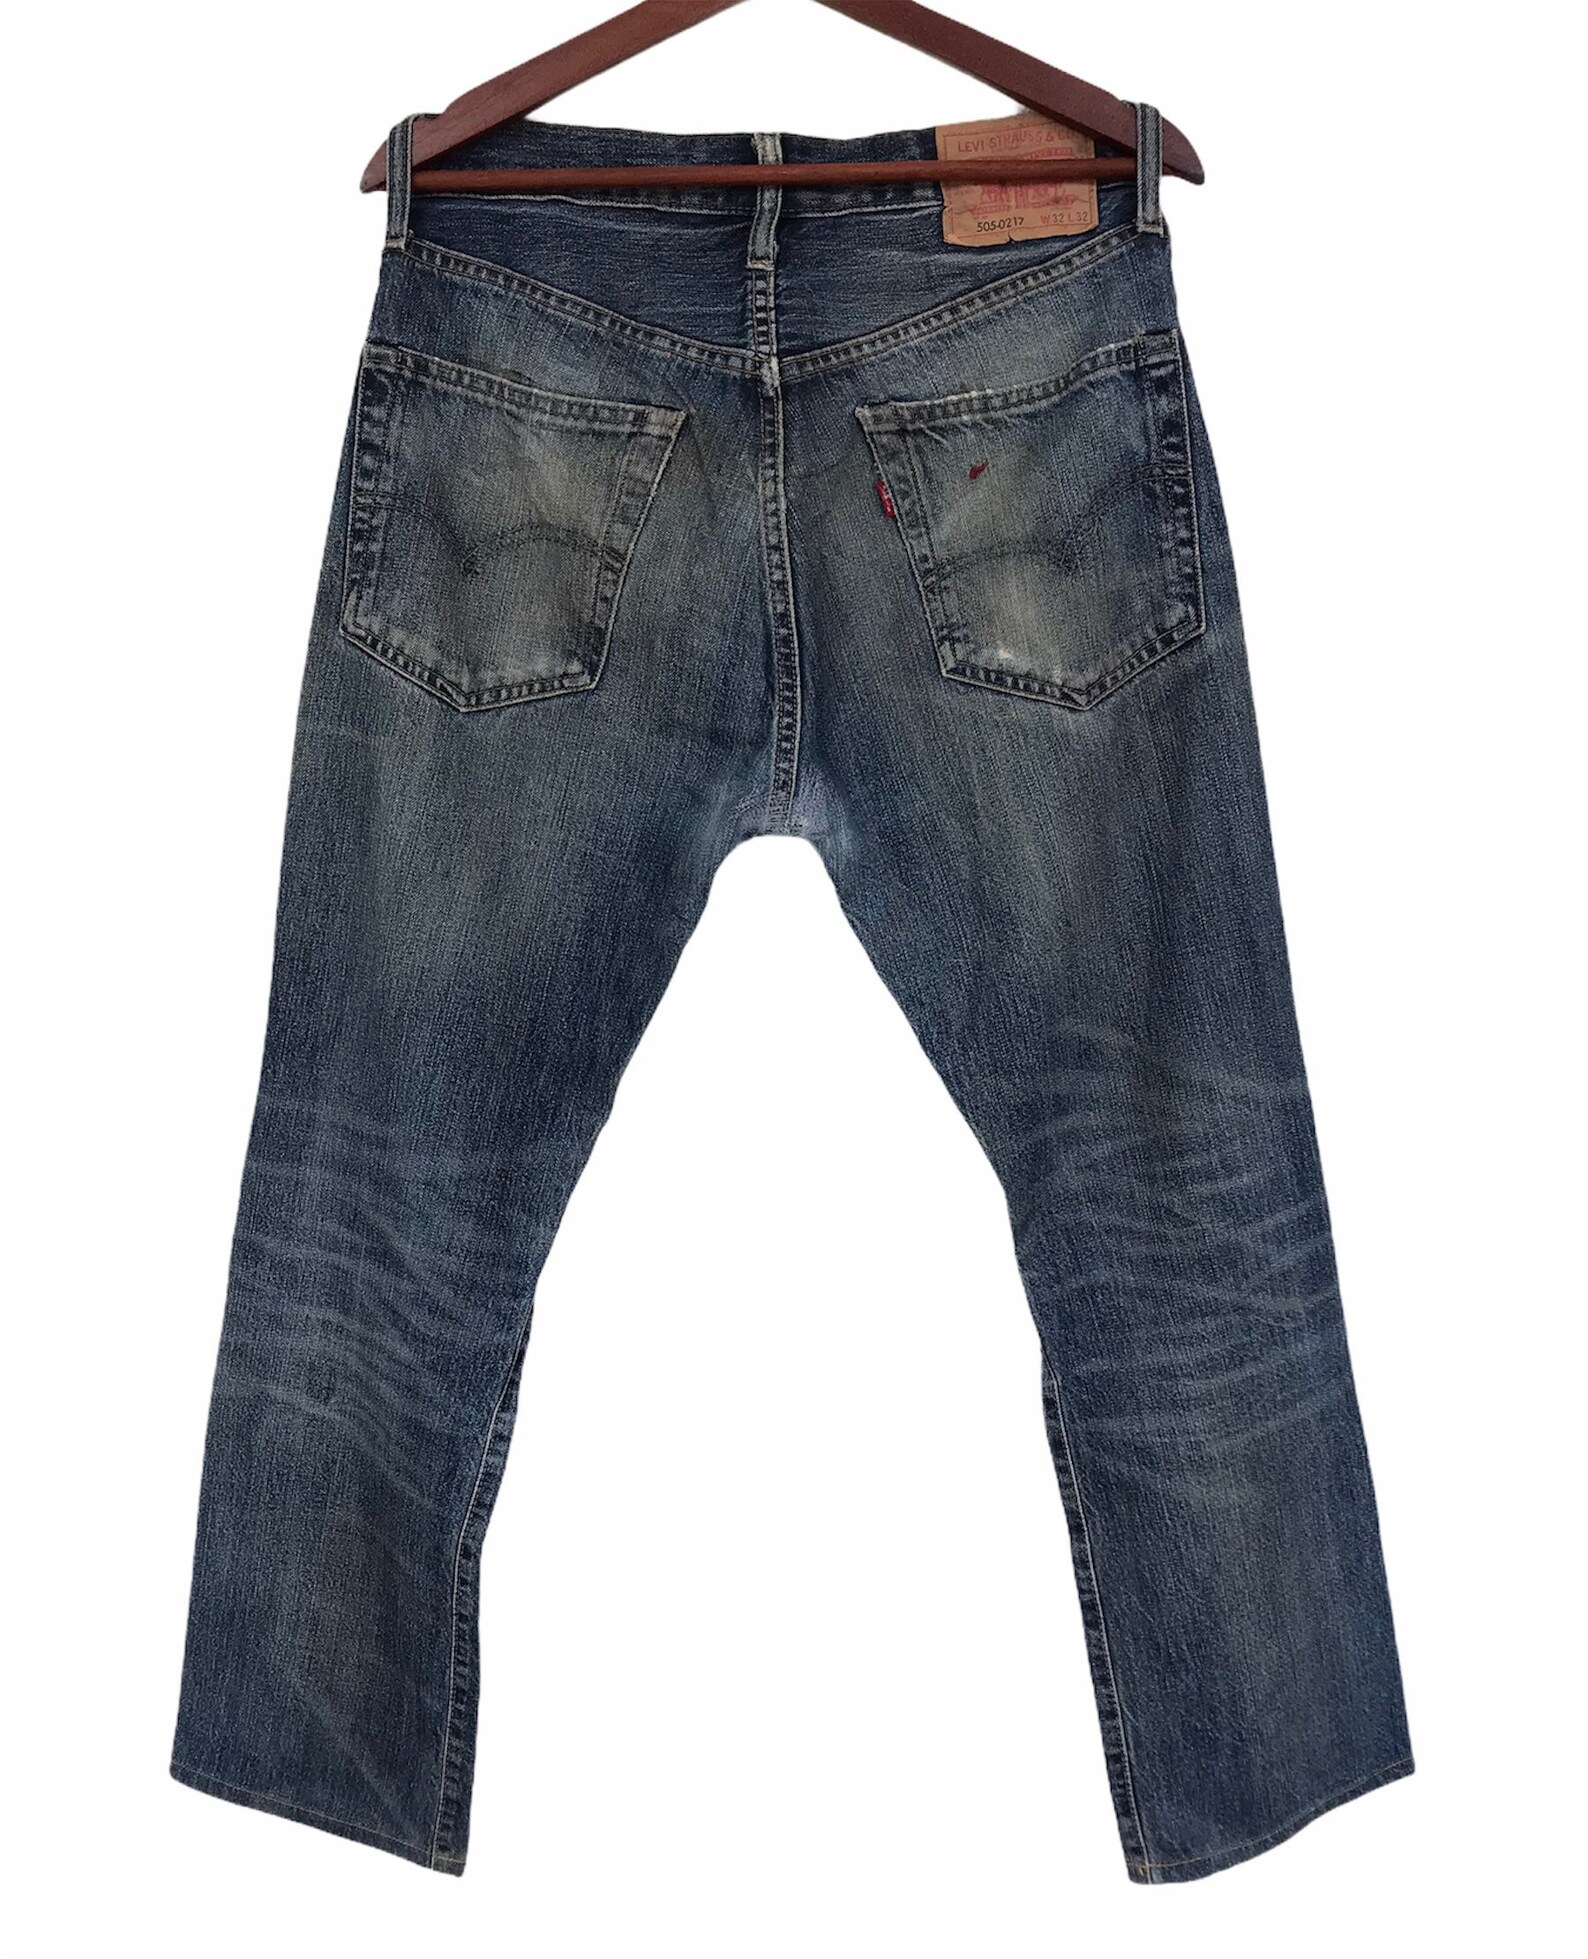 Levis Big E 505 Vtg Selvedge Disstressed Destroyed Jeans | Etsy